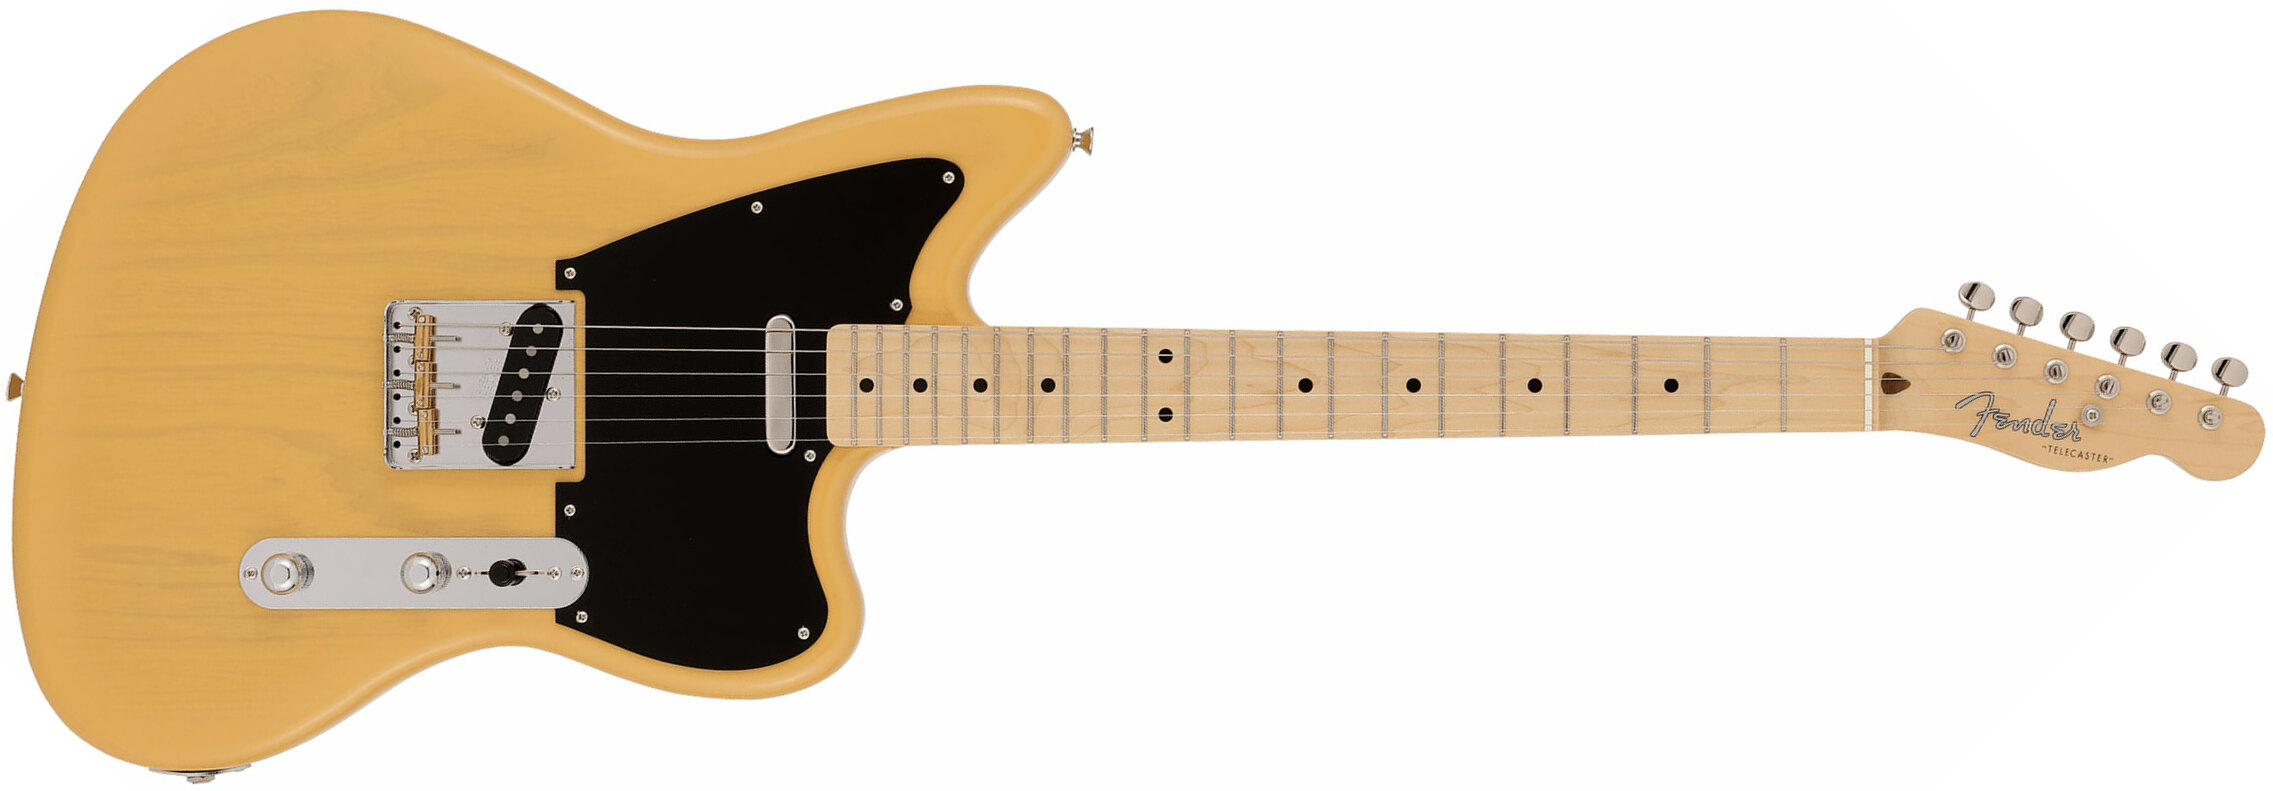 Fender Tele Offset Ltd Jap 2s Ht Mn - Butterscotch Blonde - Retro-rock elektrische gitaar - Main picture